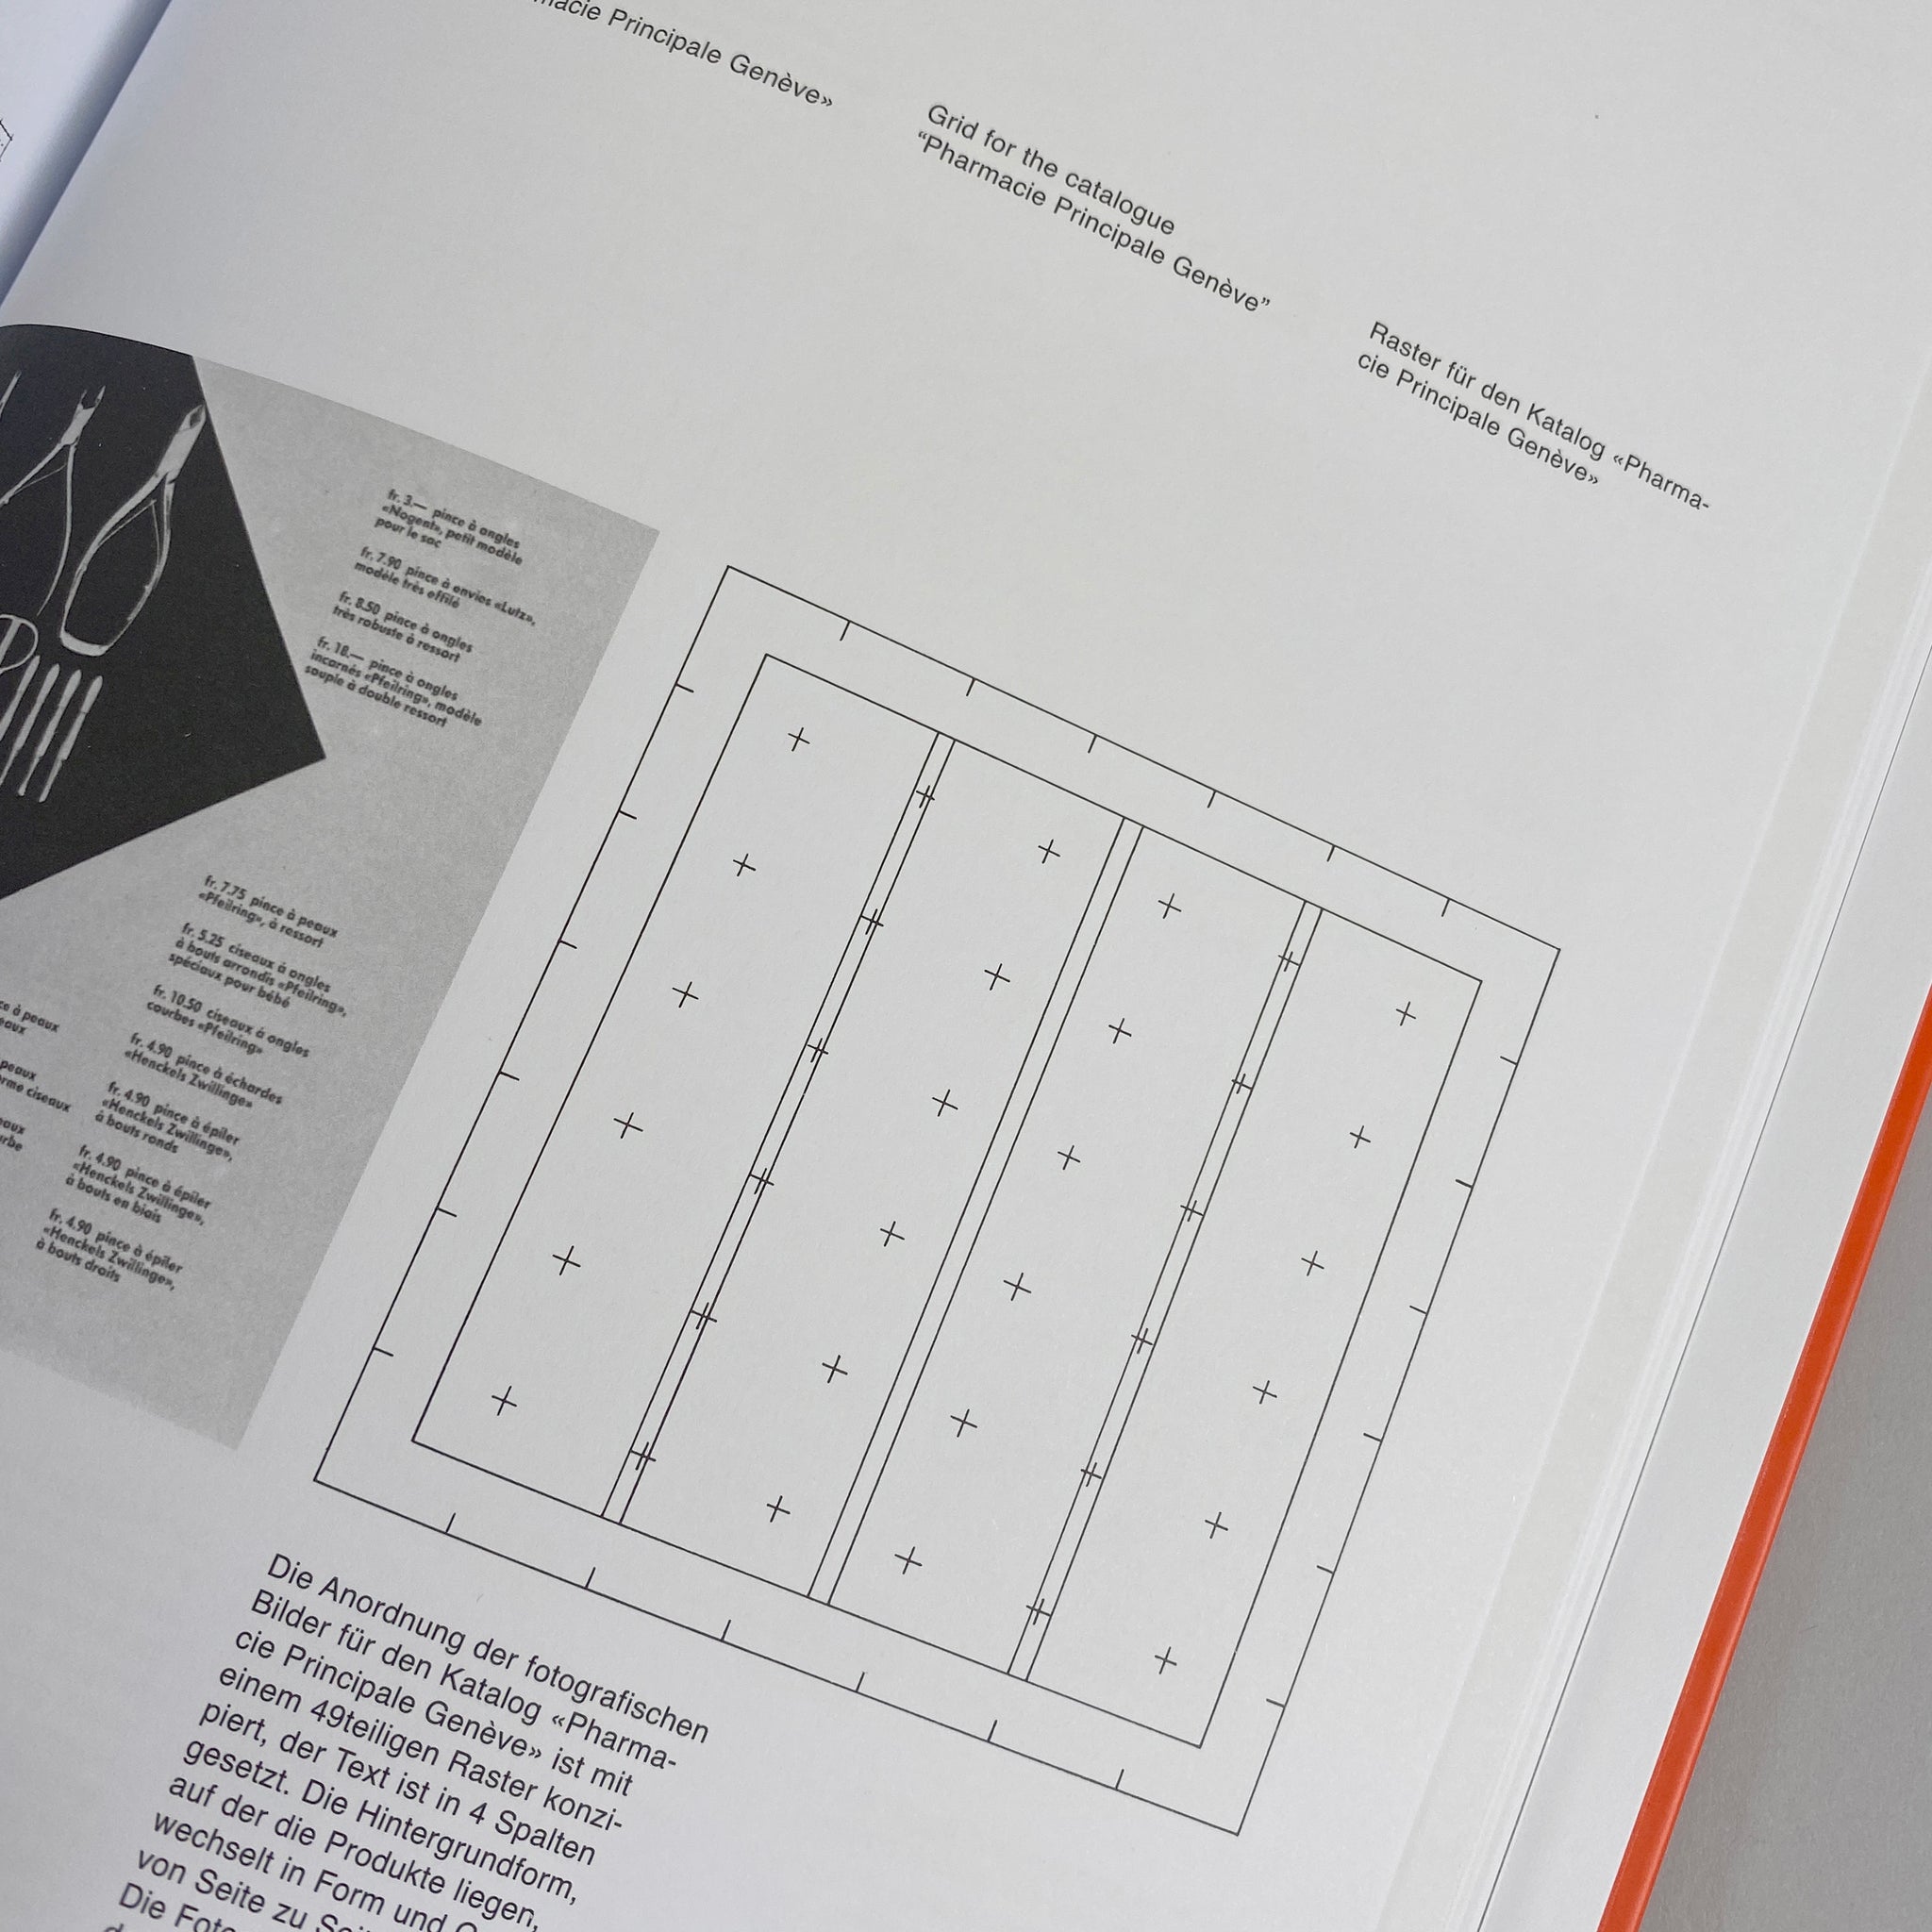 Grid Systems in Graphic Design / Josef Müller-Brockmann